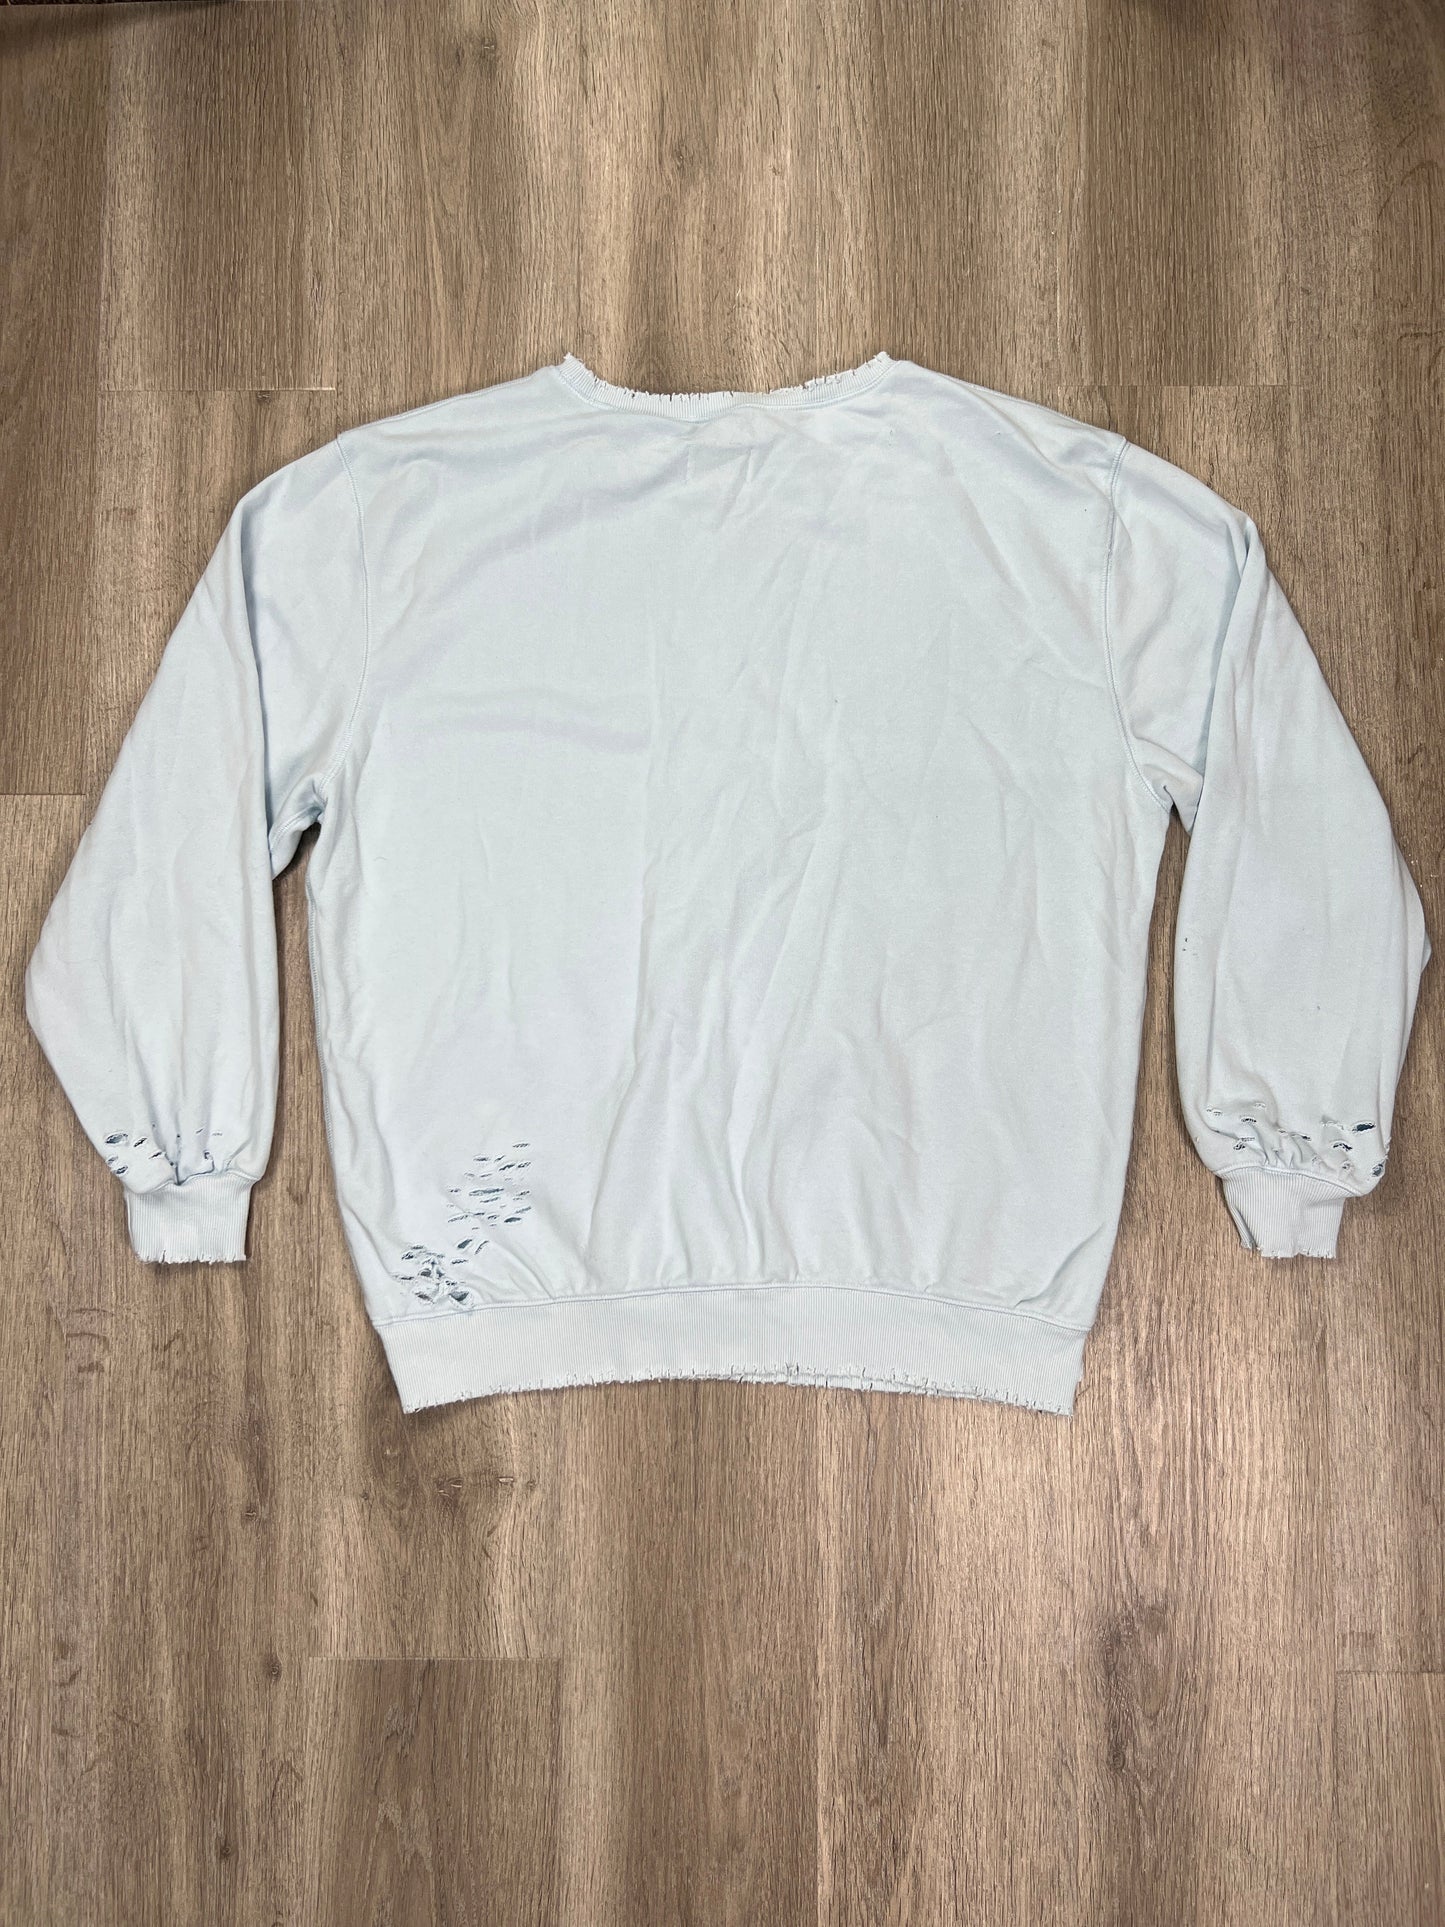 Sweatshirt Crewneck By Bdg  Size: M